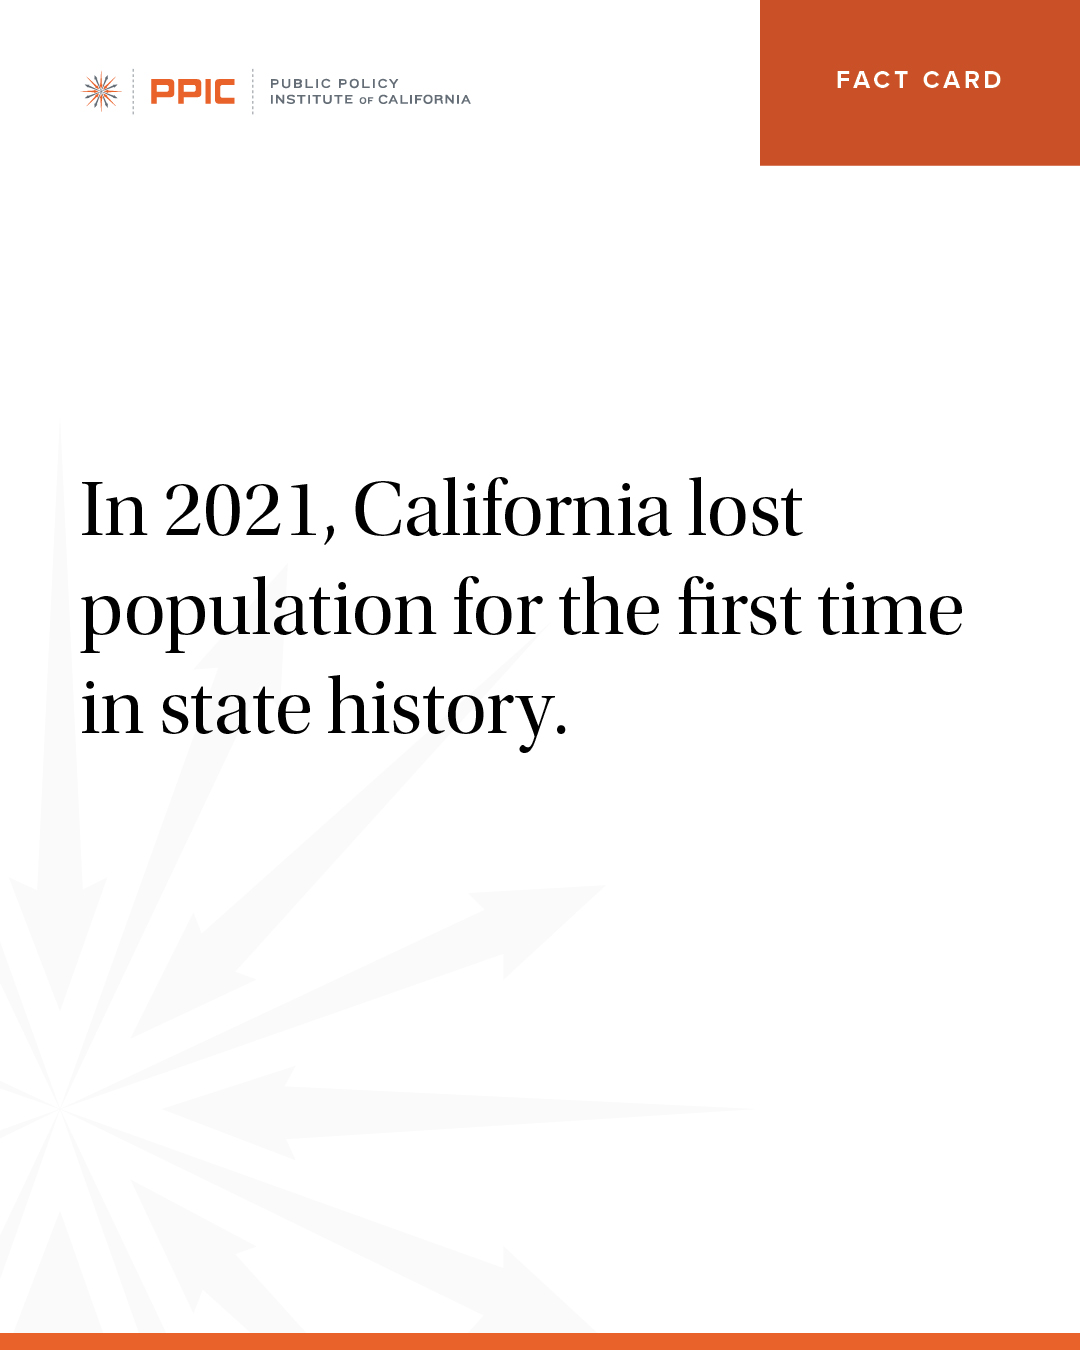 Cali, History & Facts